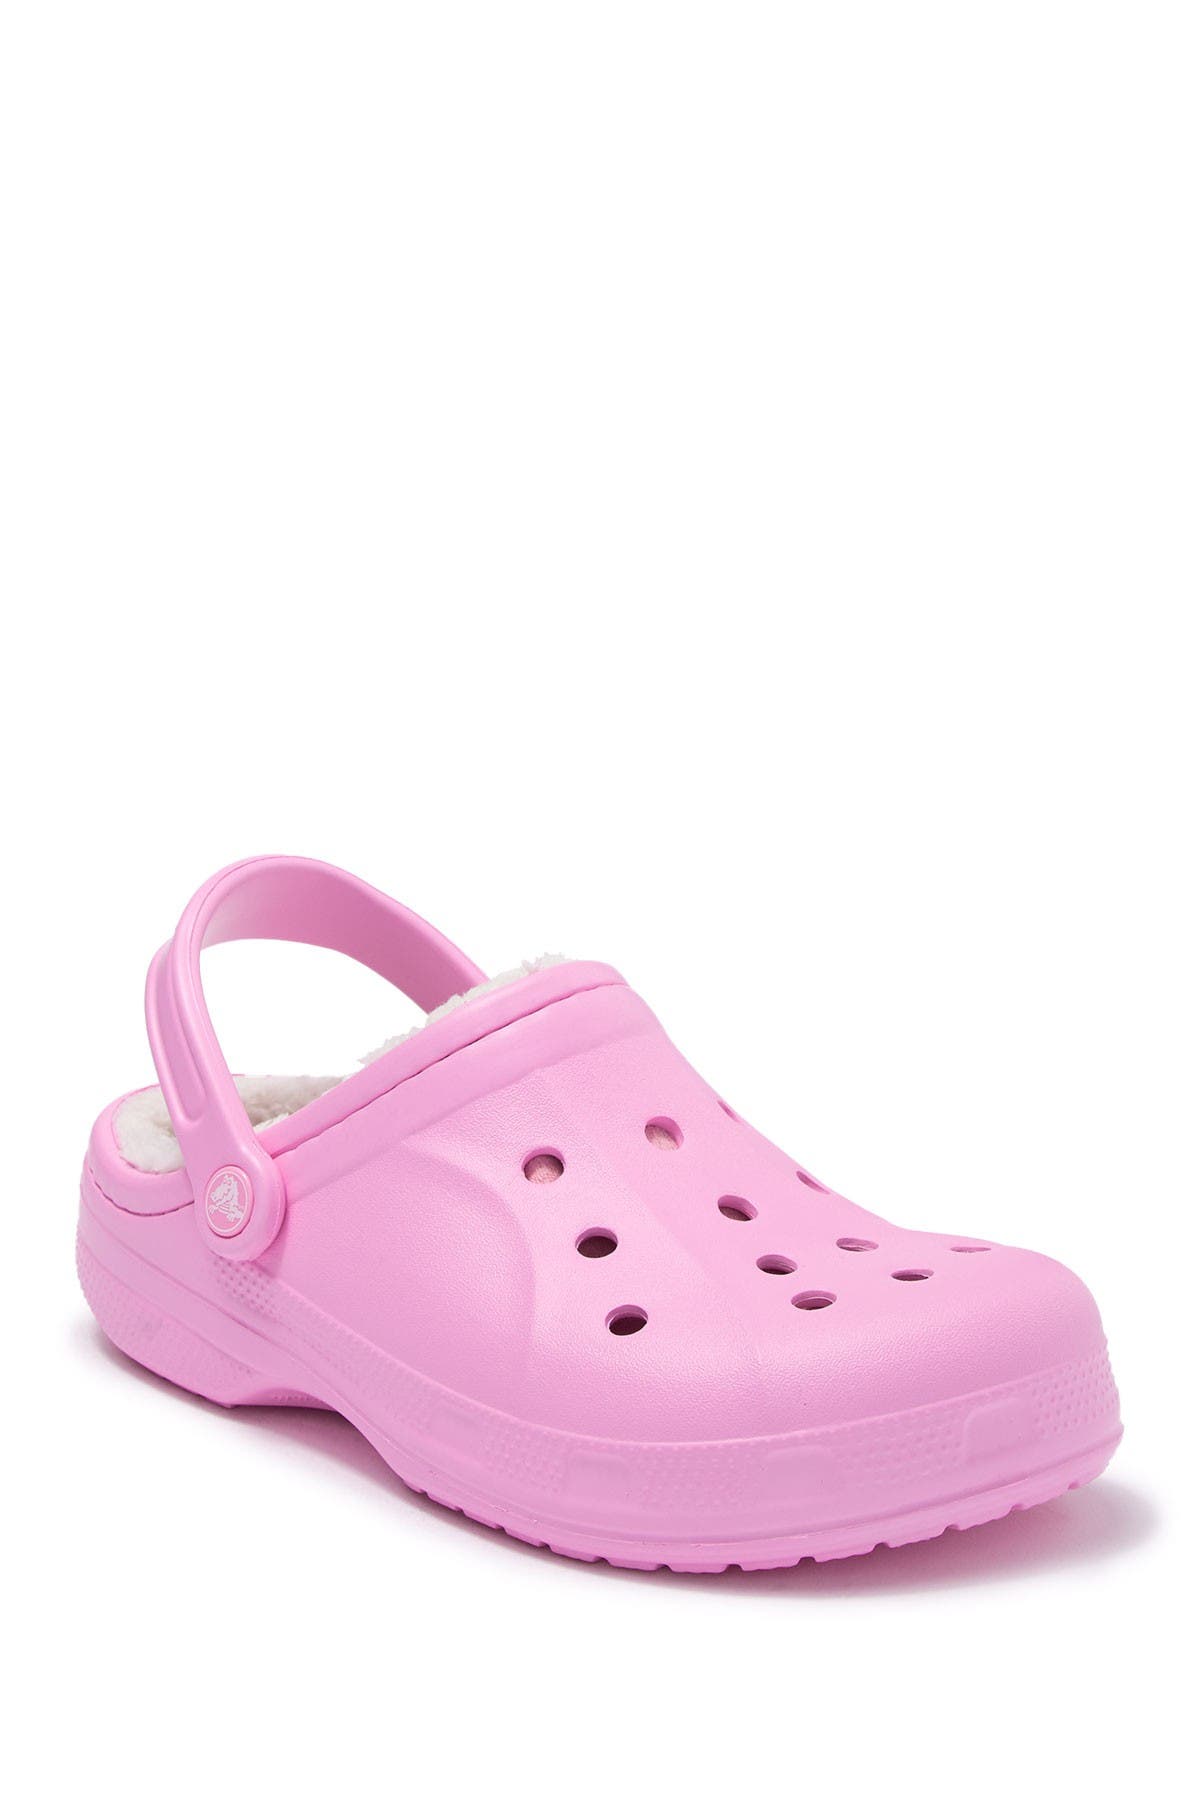 pink crocs with fur inside